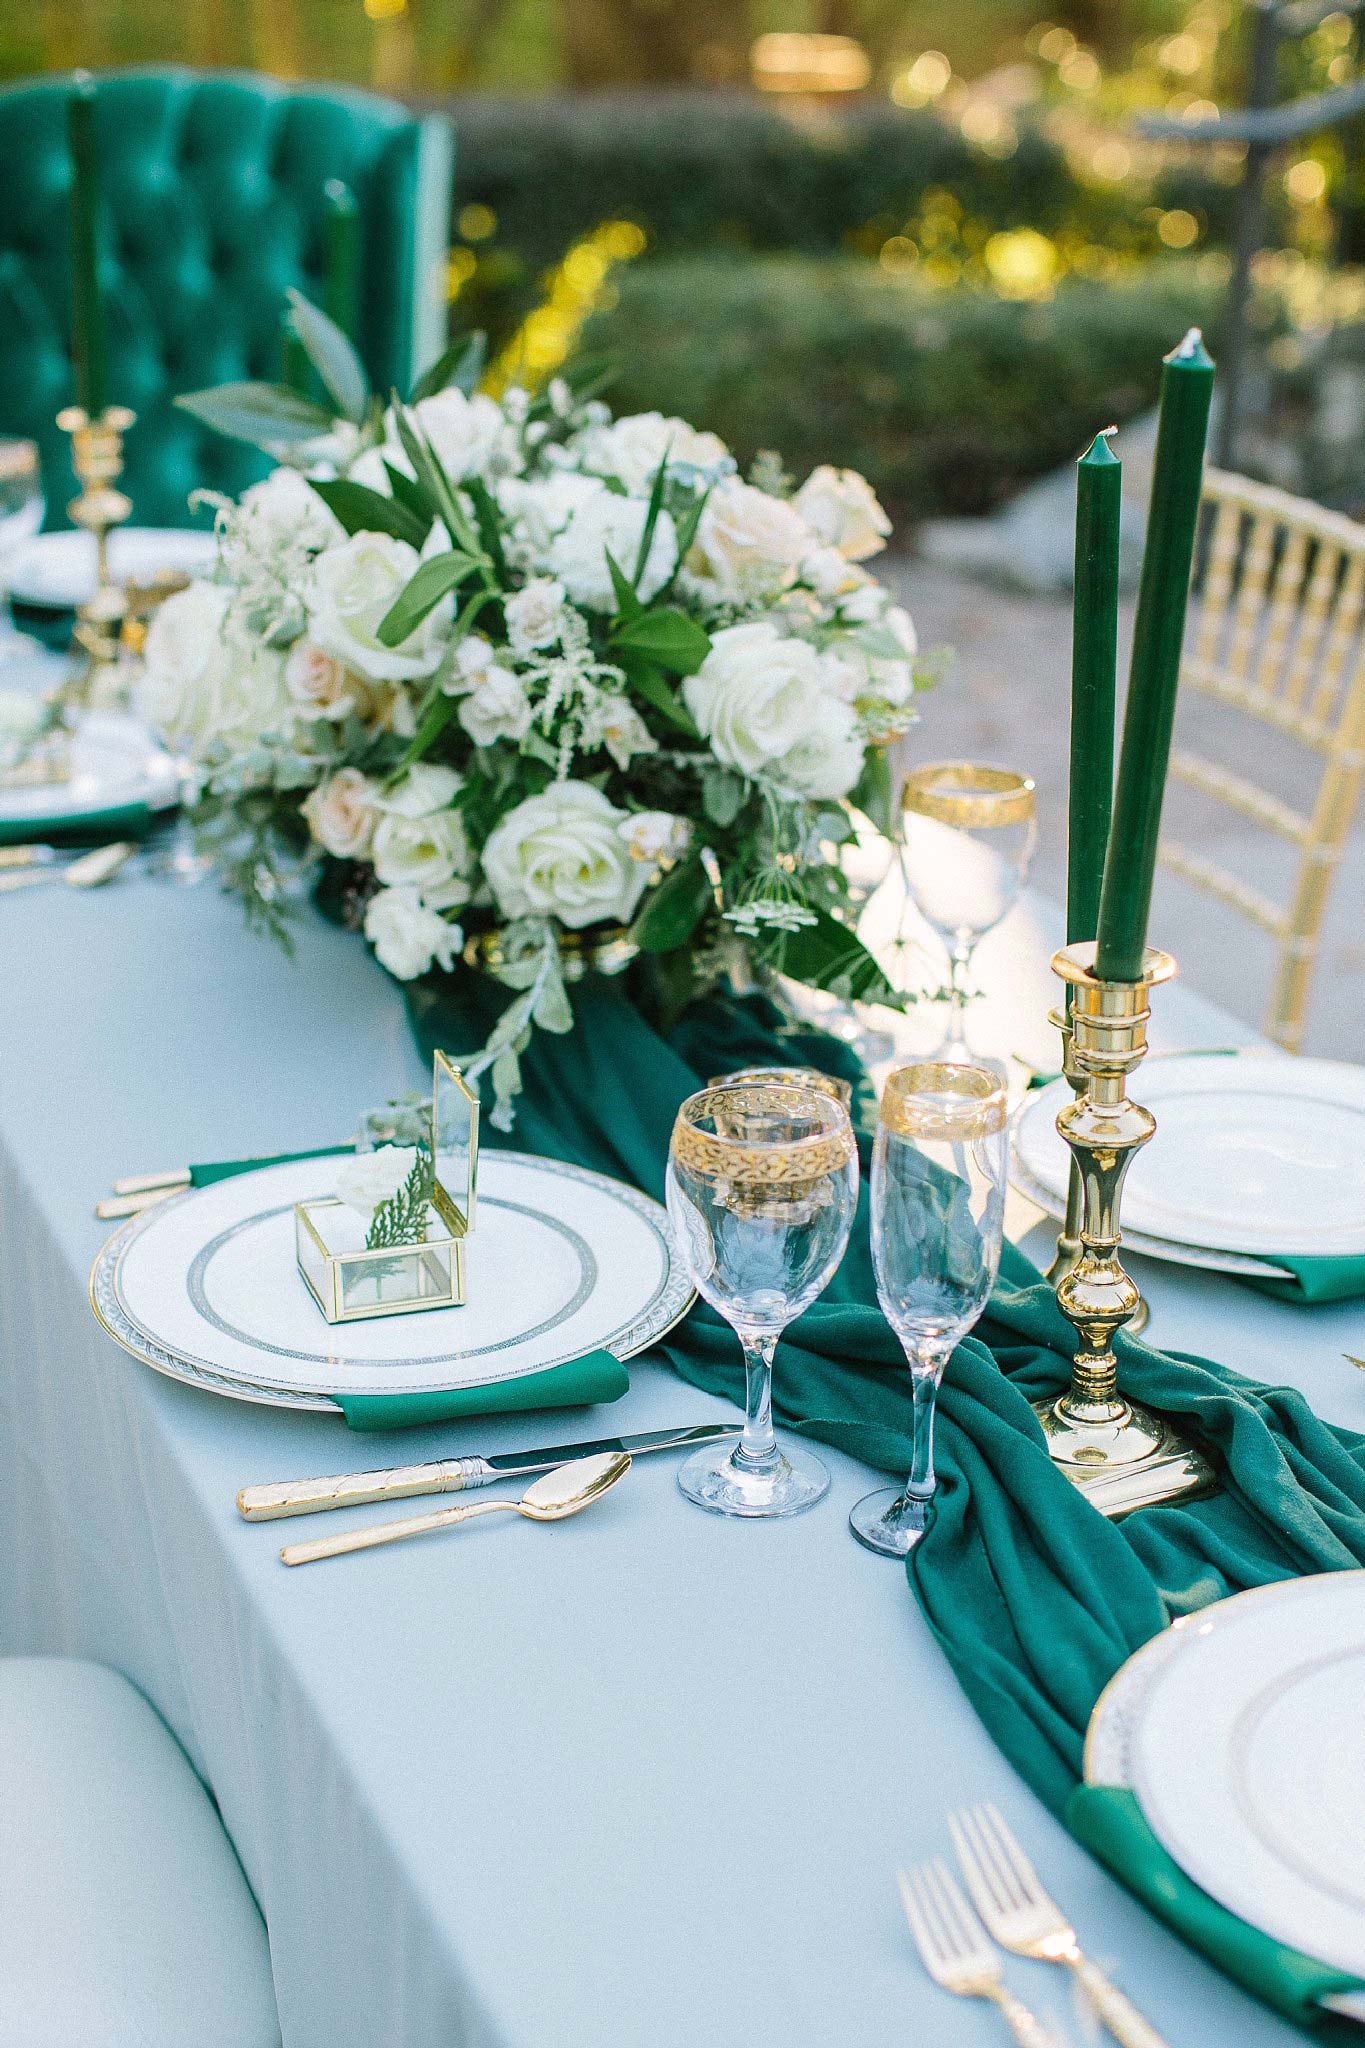 aristide mansfield wedding grey reception table with green runner